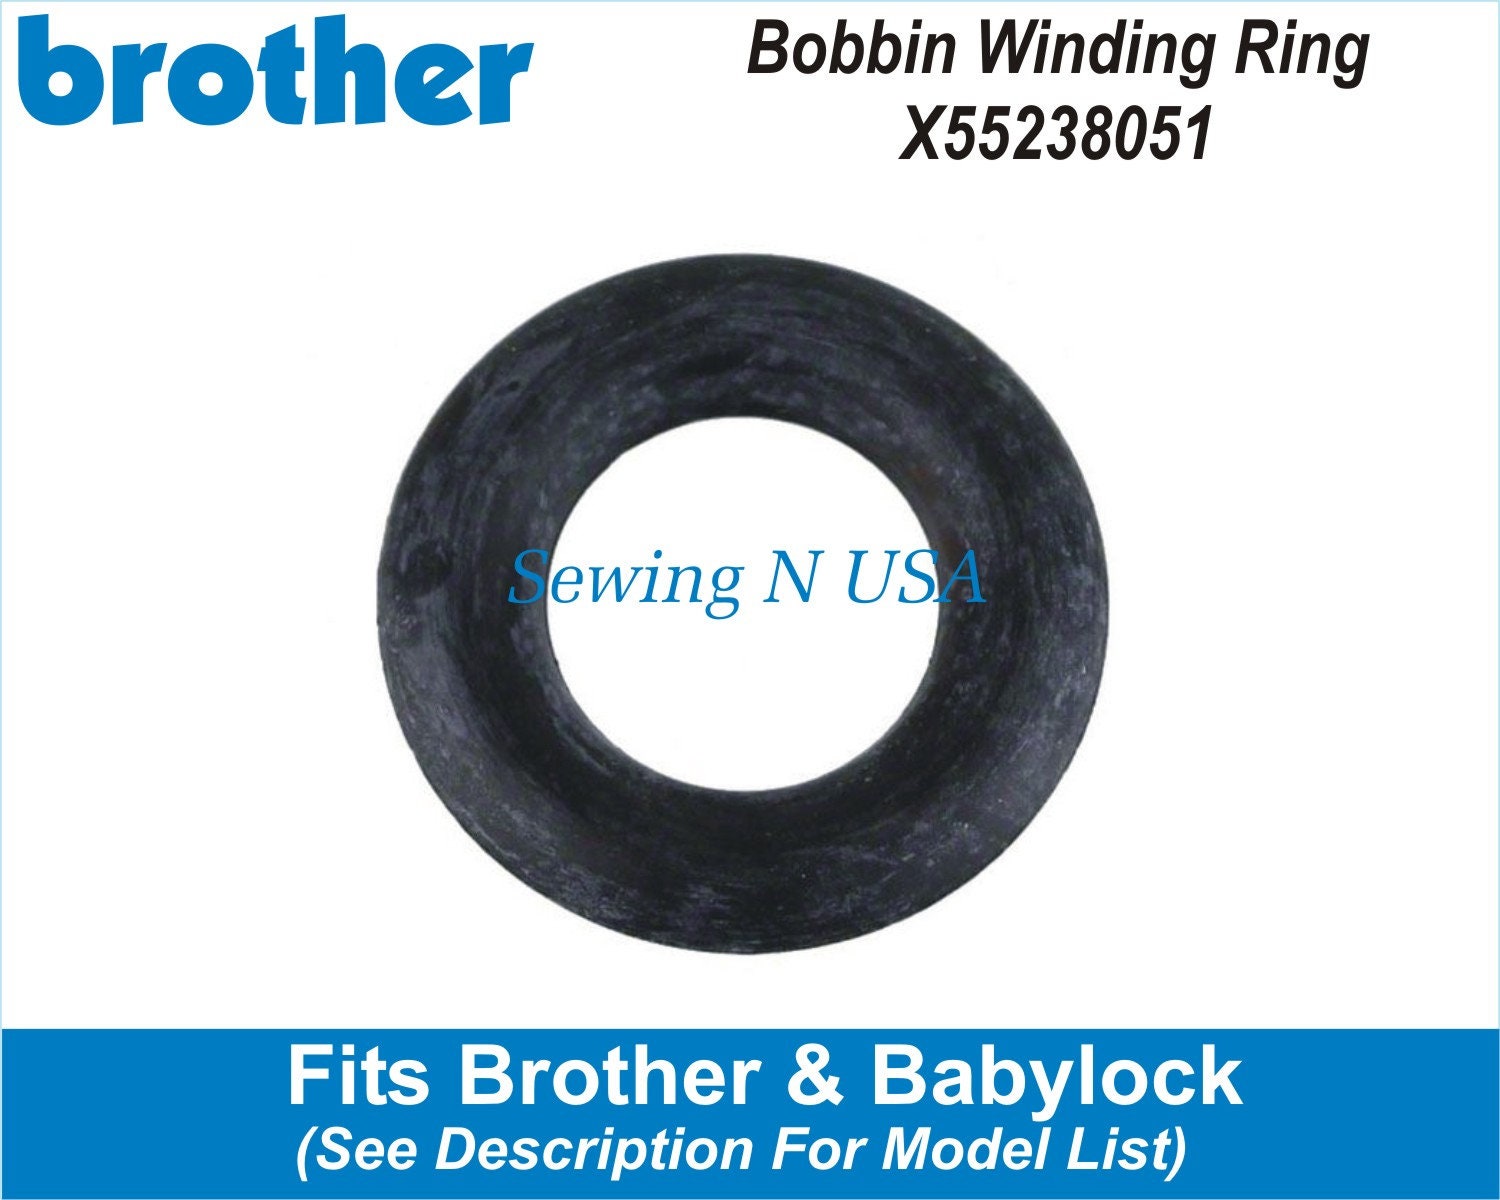 ELNA Sewing Machine BOBBIN WINDER Tire Rubber Belt Small Ring 413130 